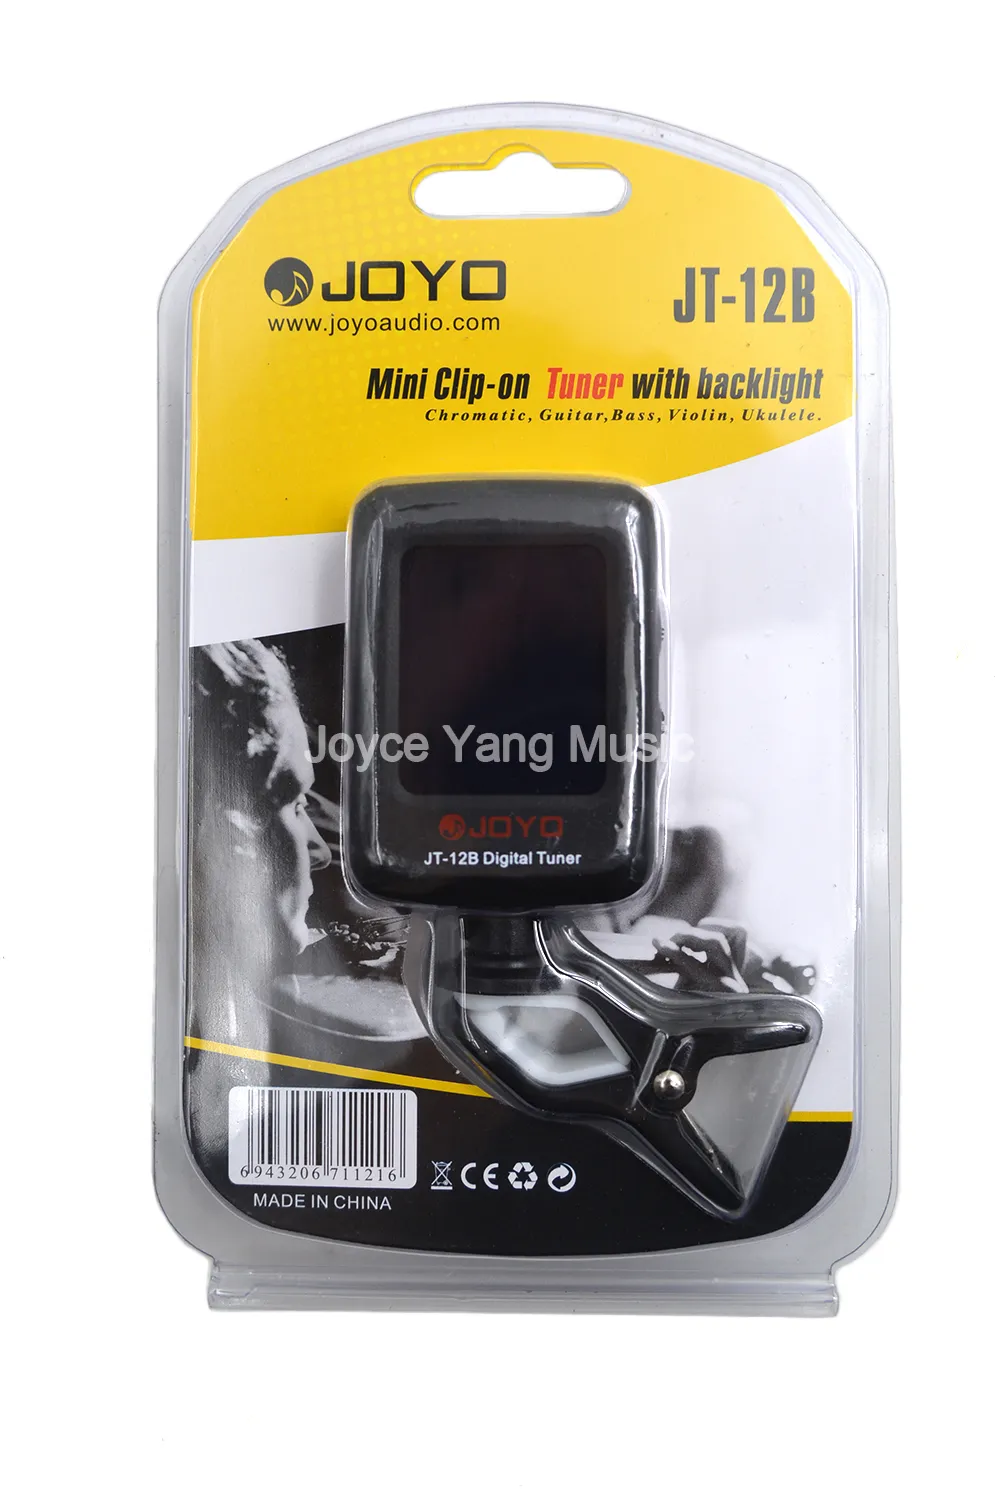 JOYO JT-12B Clip on Digital Guitar Tuner with Backlight Rotated For Chromatic/Guitar/Bass/Violin/Ukulele